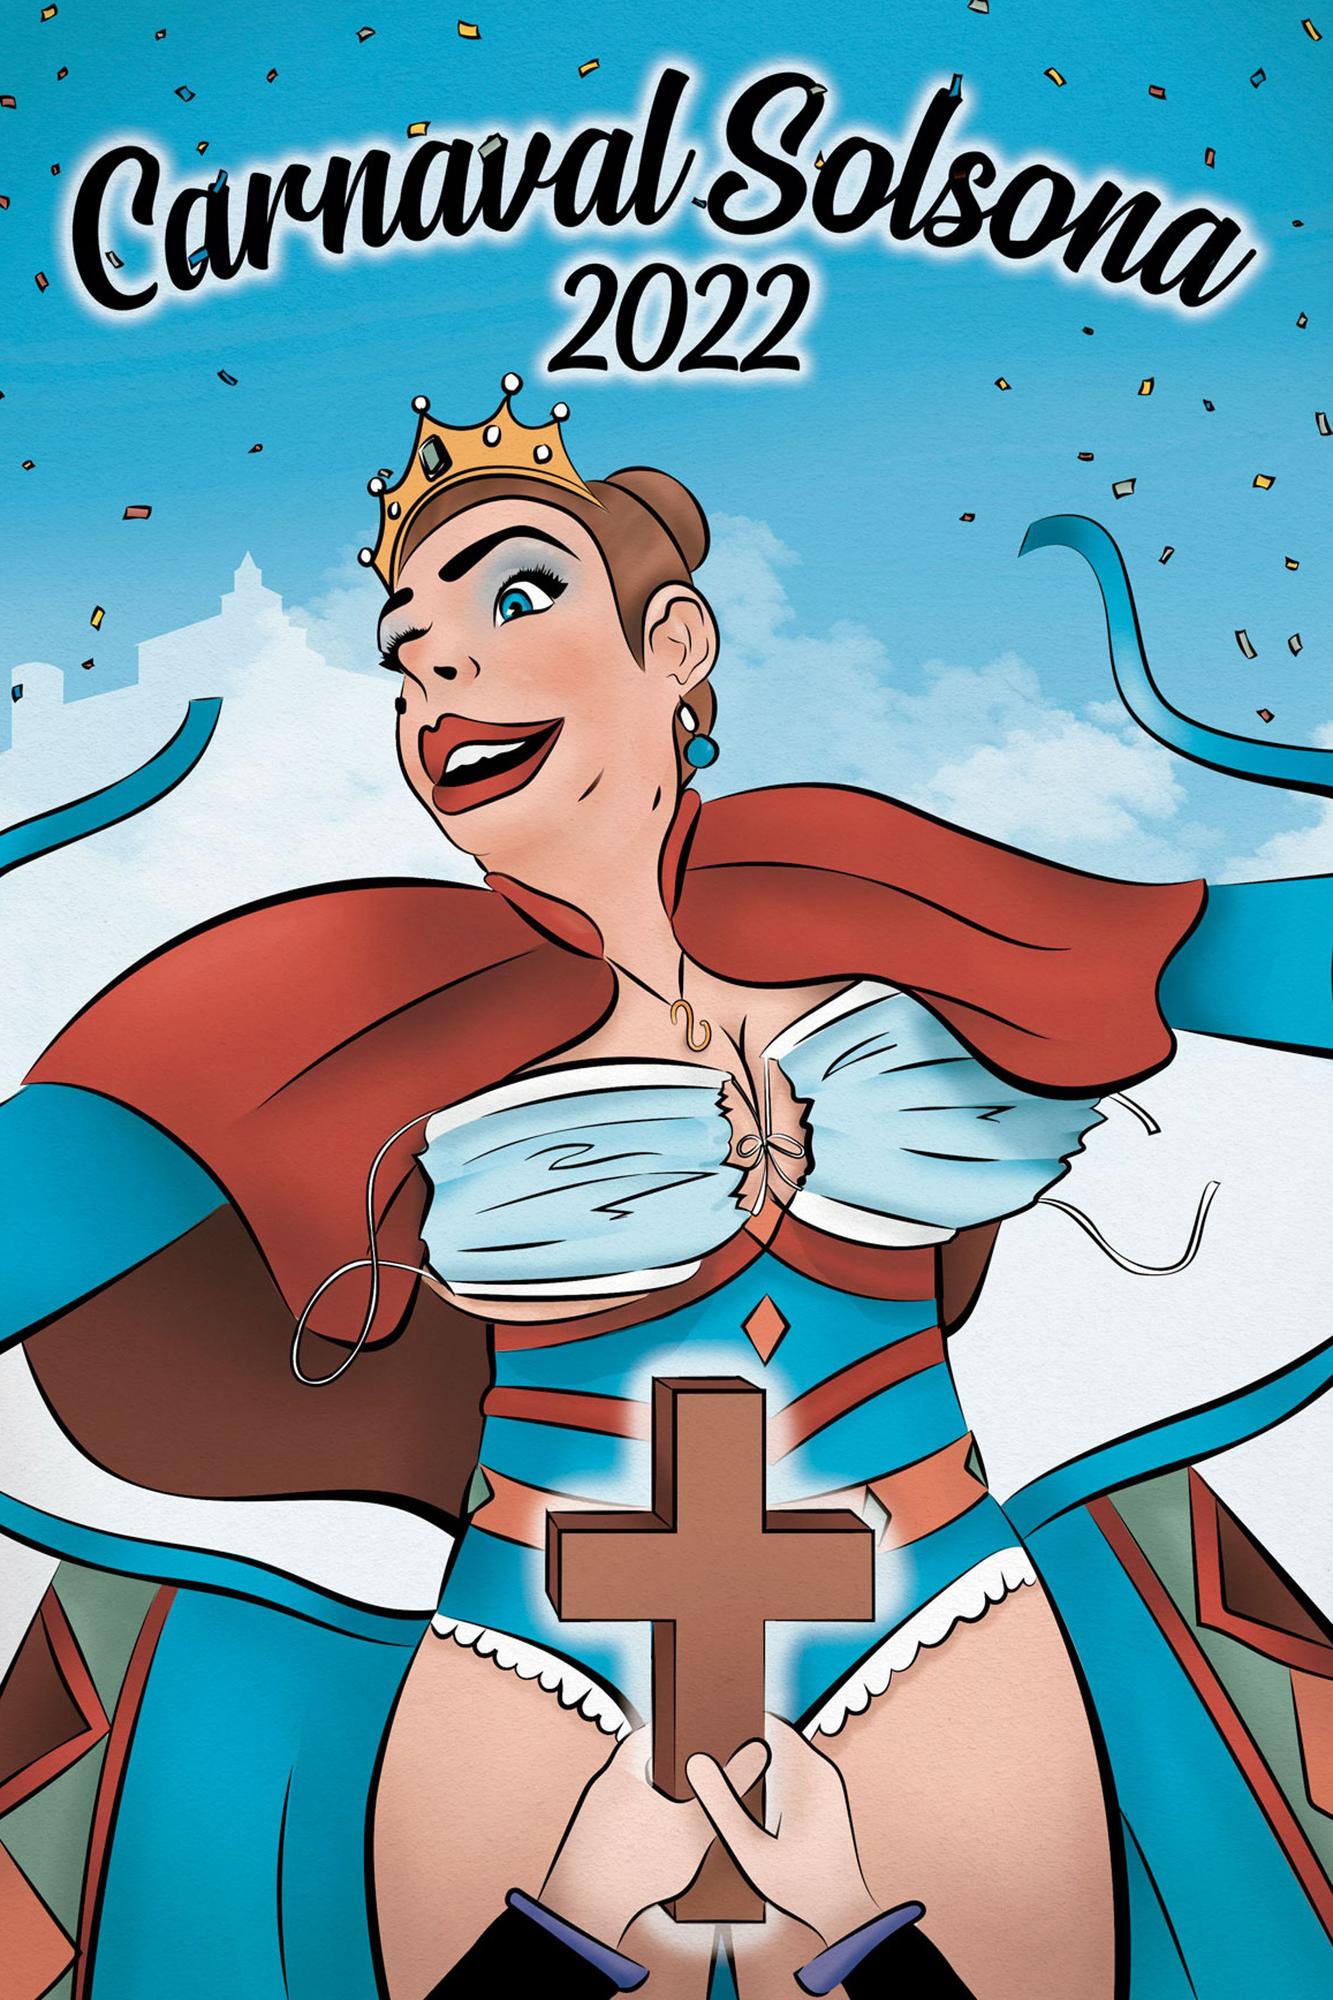 Cartell del Carnaval de Solsona 2022